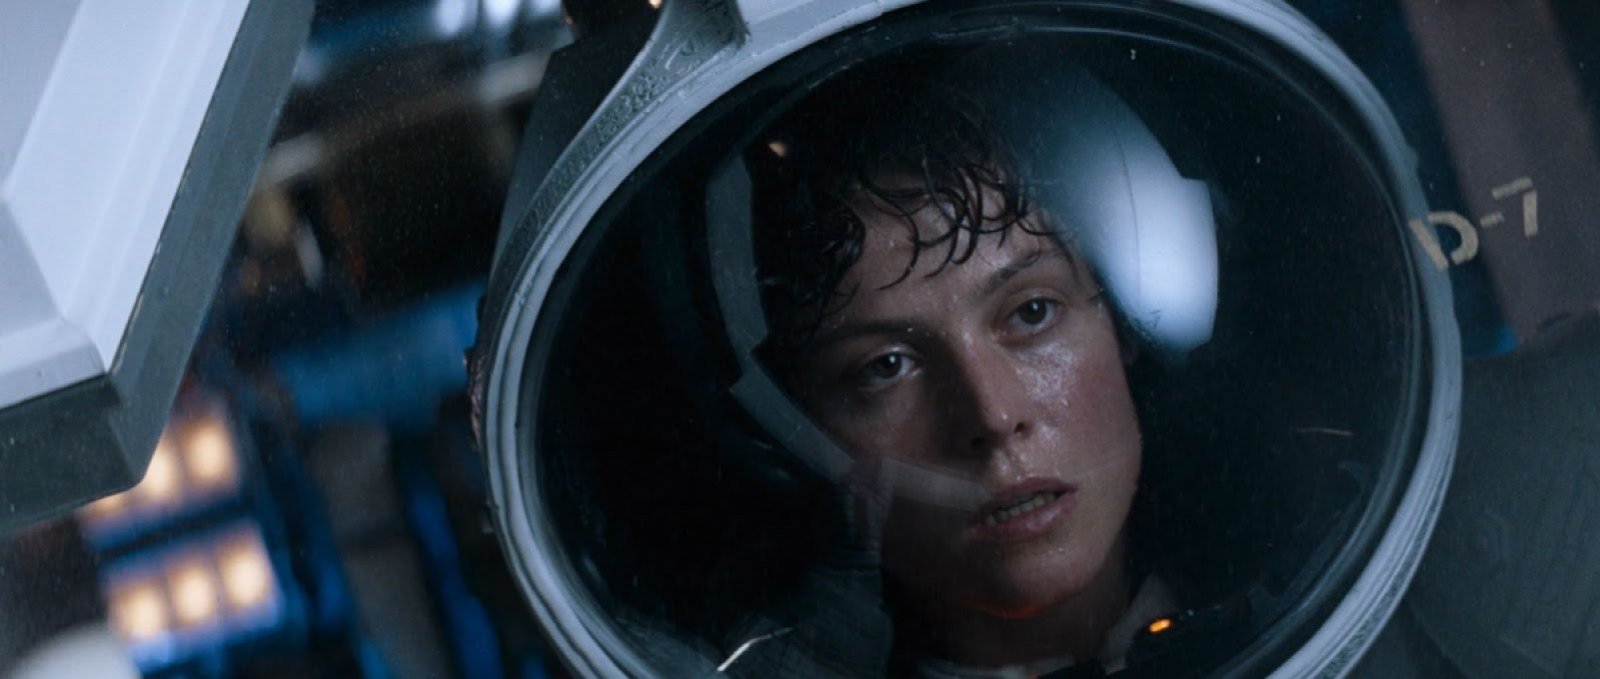 Ripley looking exhausted in Alien